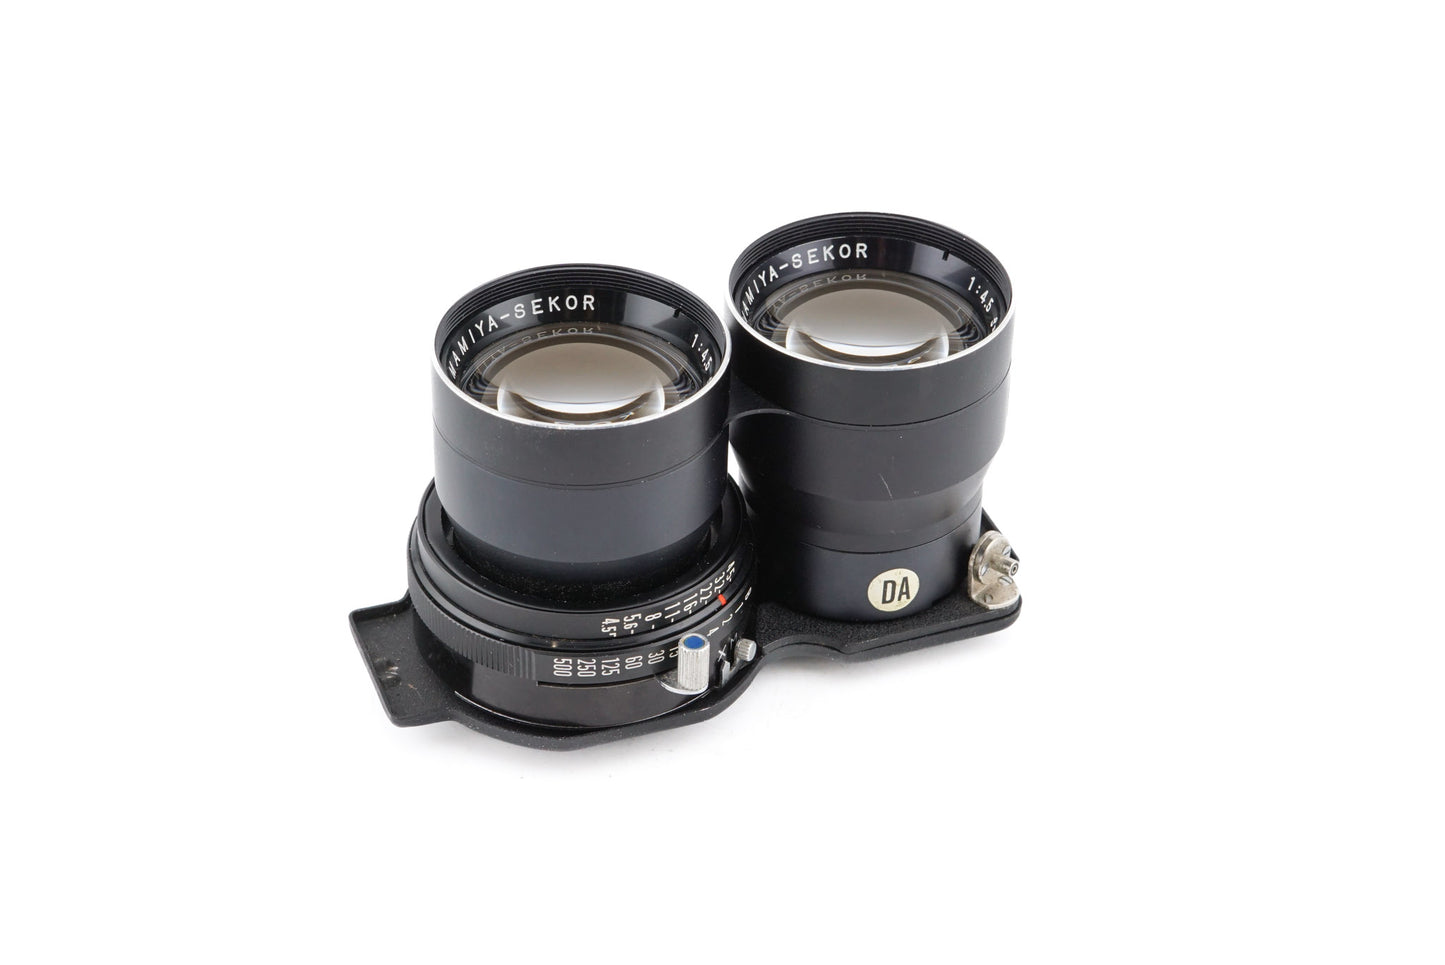 Mamiya 135mm f4.5 Sekor "Blue Dot" - Lens